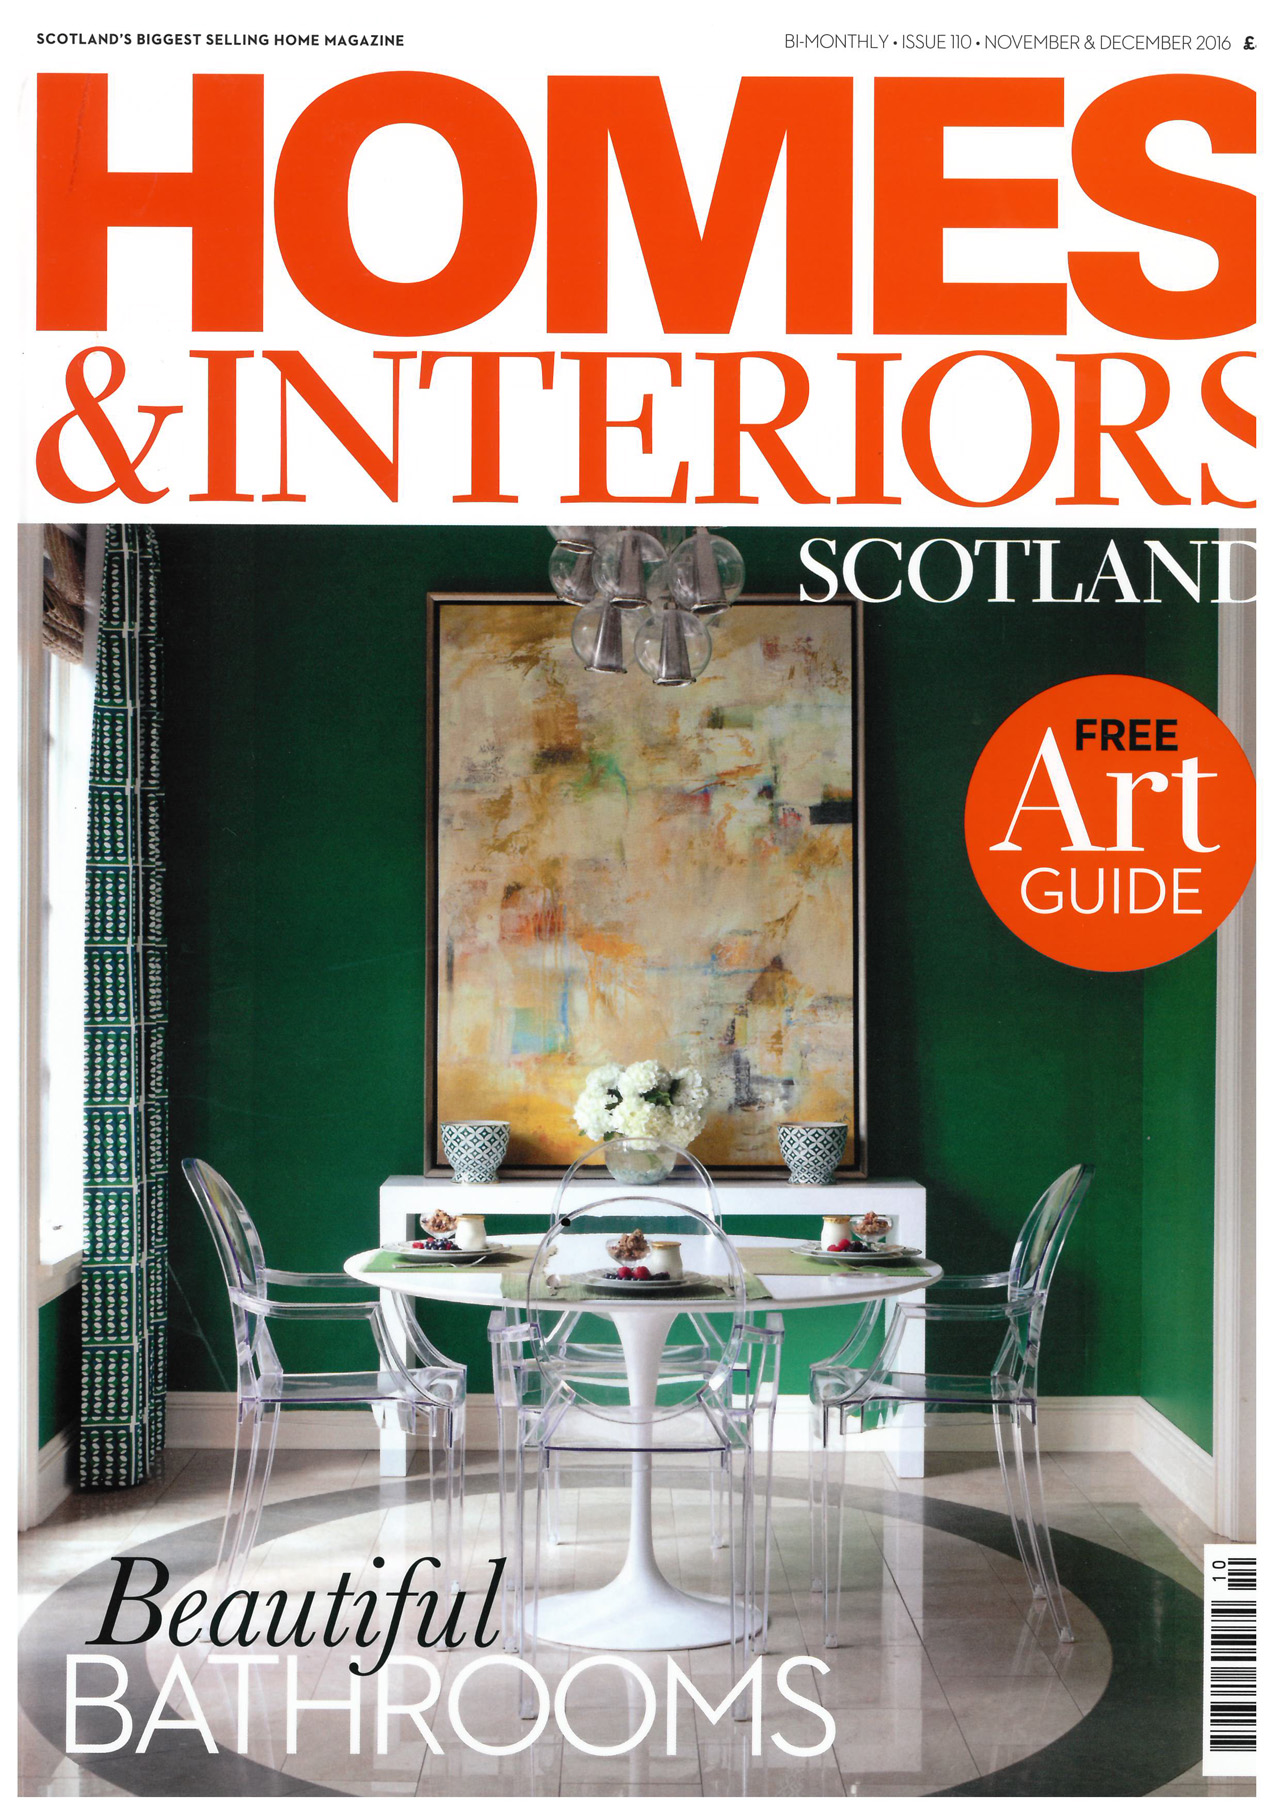 Home & Interiors: Scotland: Craft & Design - Home & Interiors, Issue 110